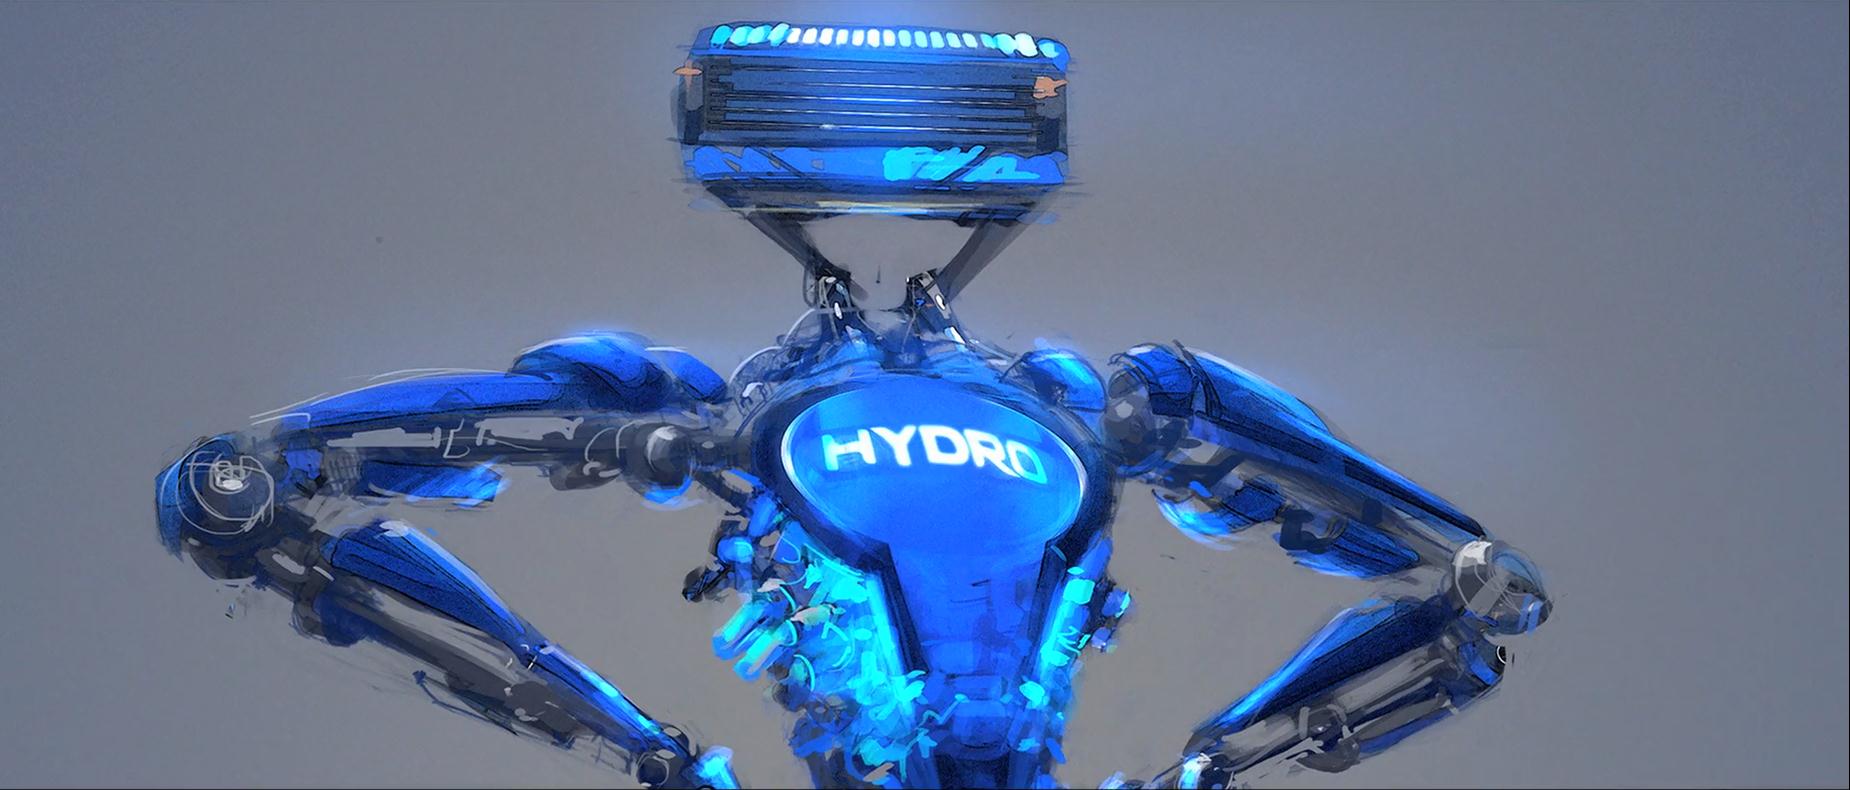 Behind the Scenes Schick Hydro Robot